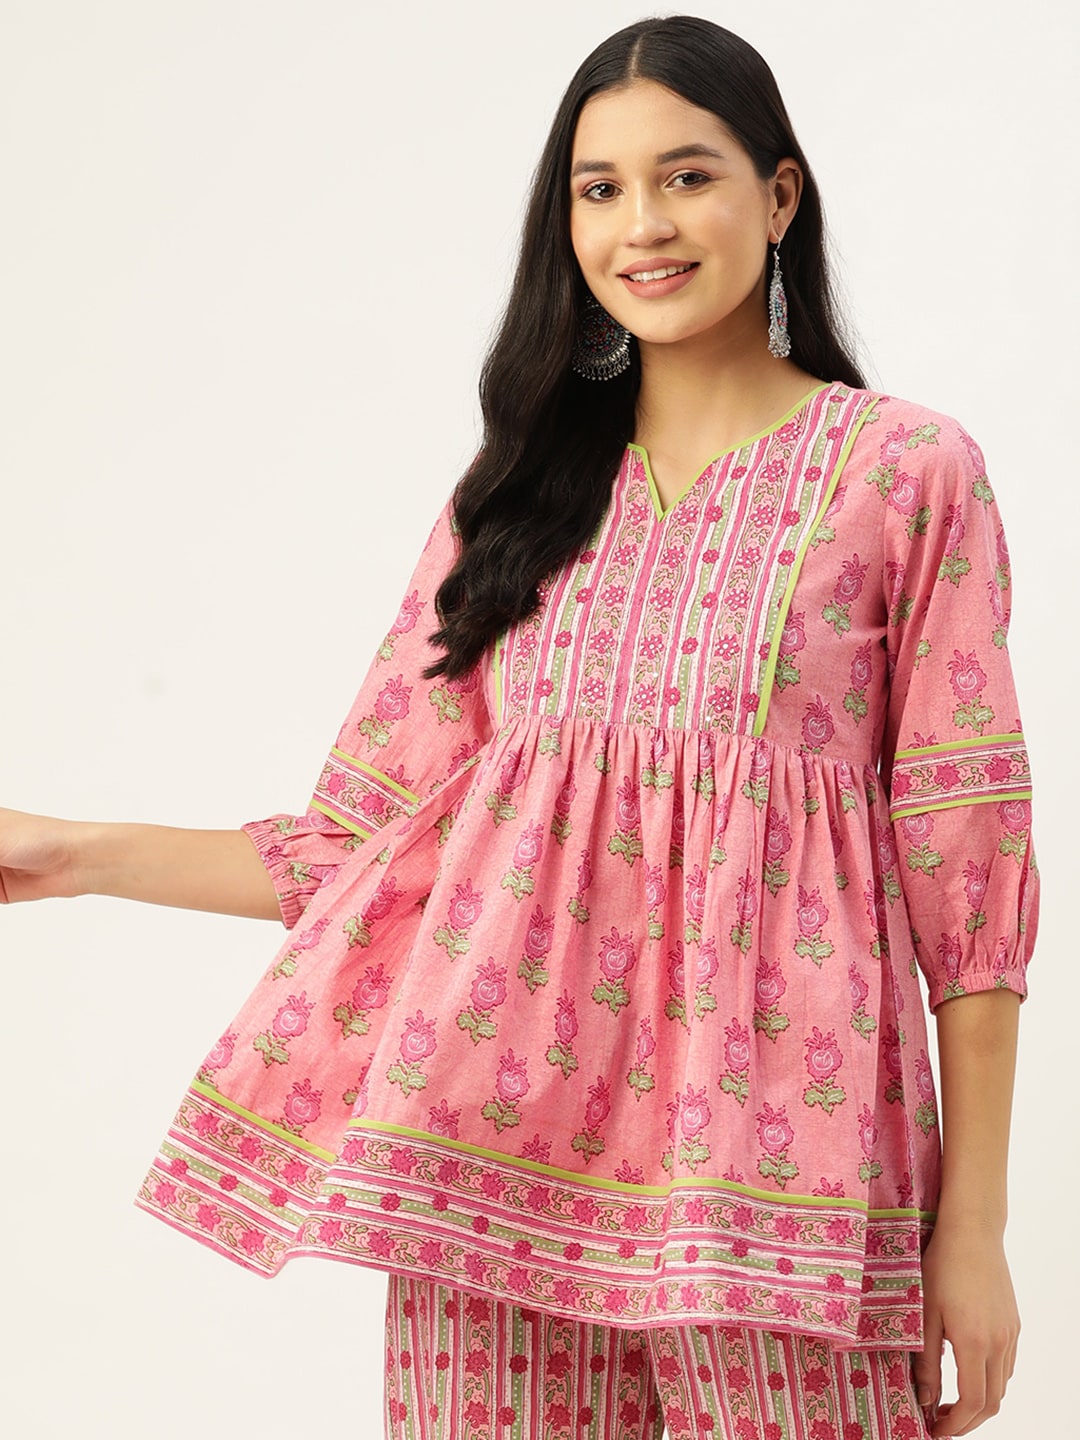 Jaipur Morni Pink Floral Print Cotton Empire Top Price in India